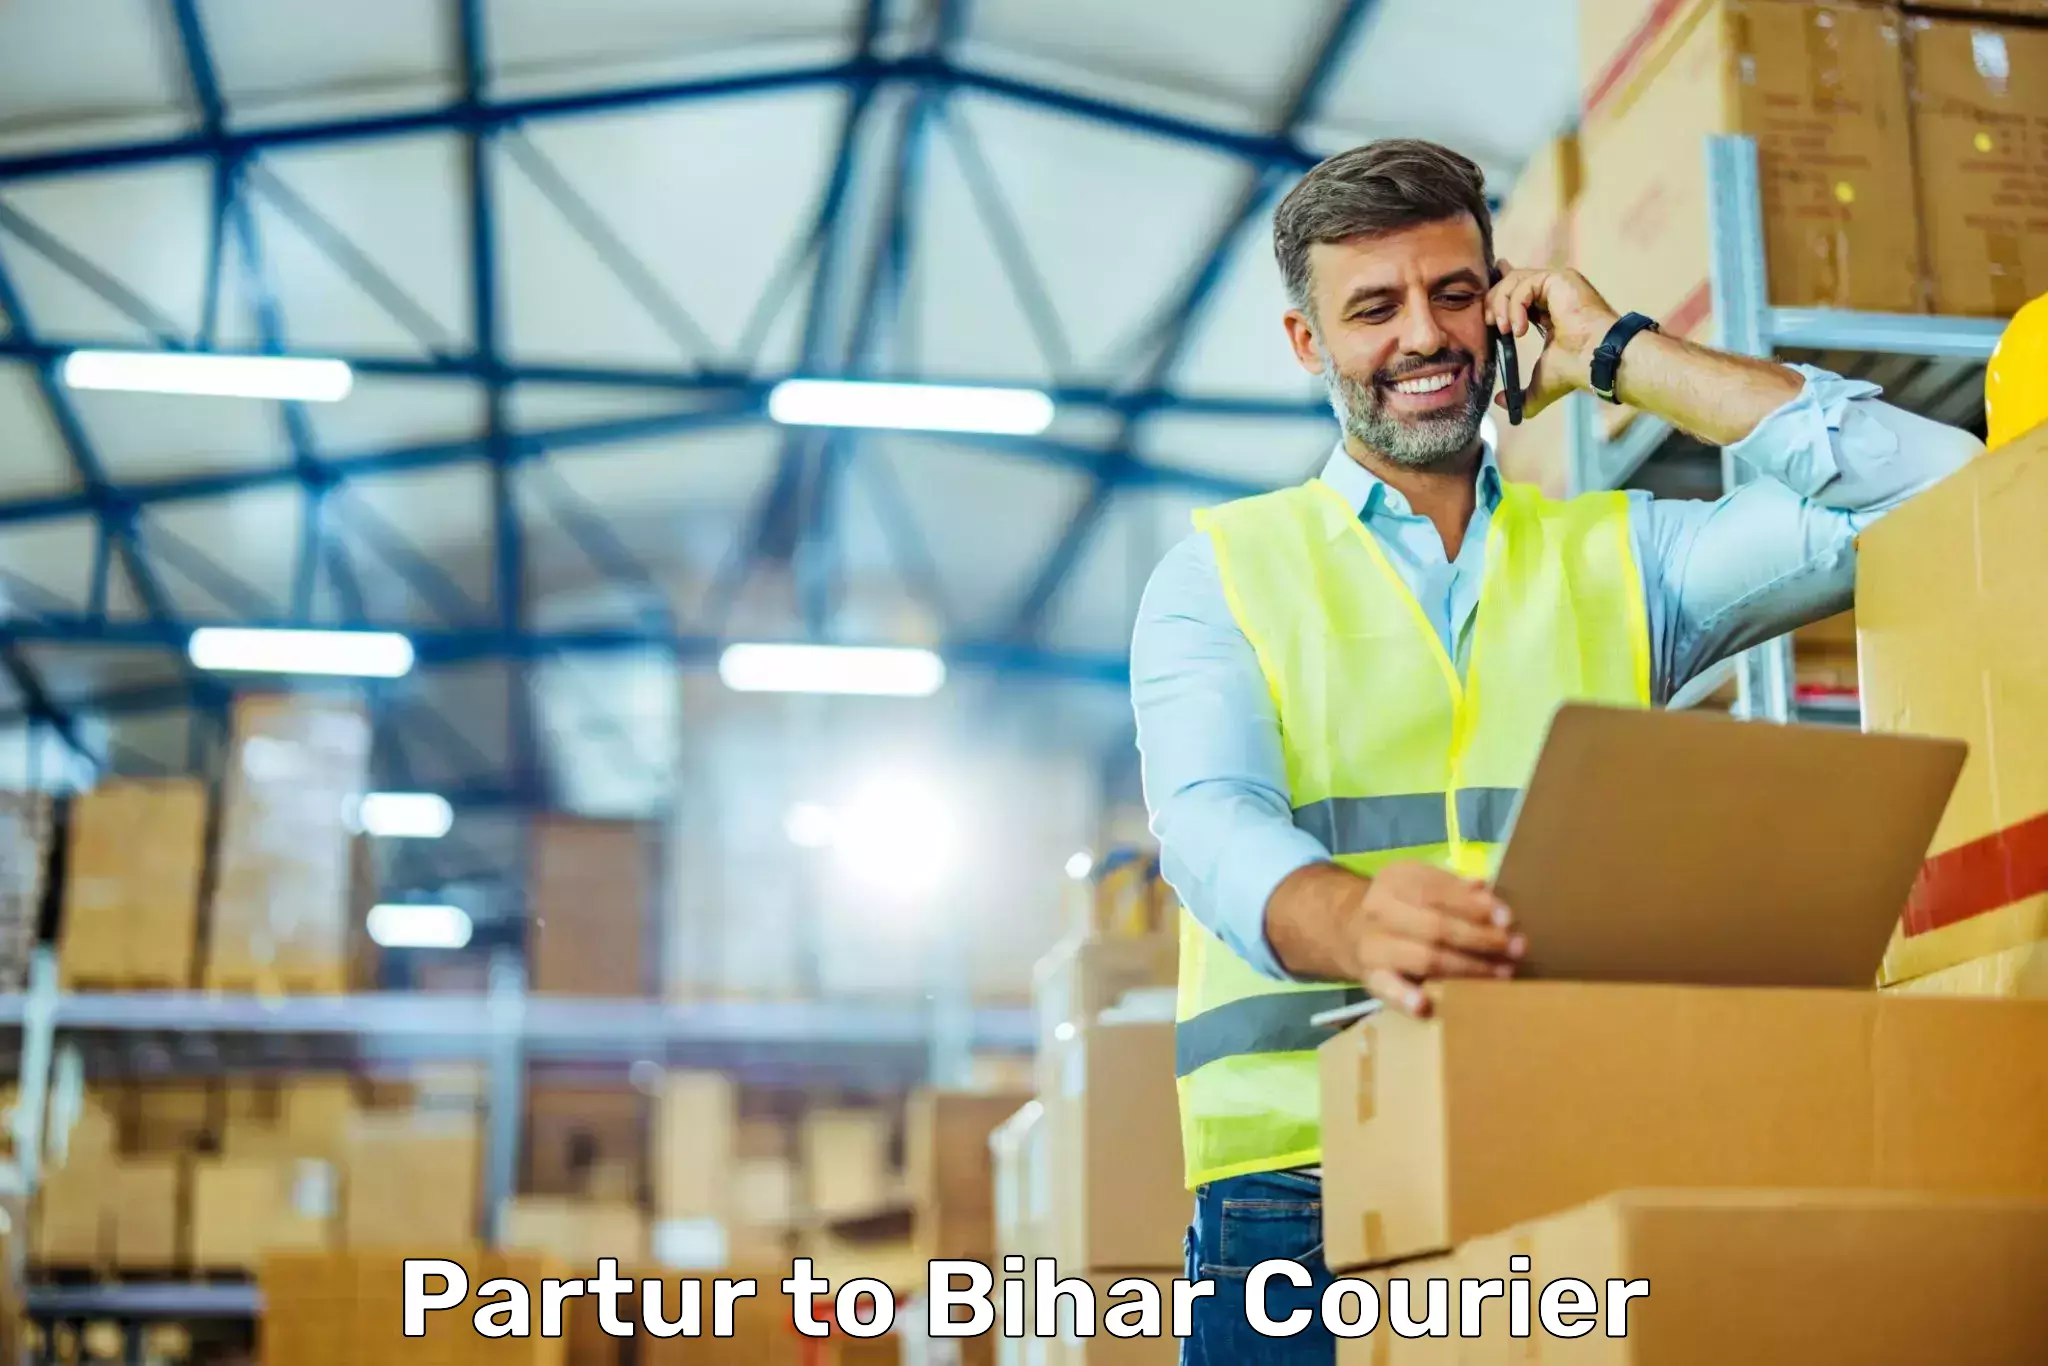 Express logistics Partur to Bihar